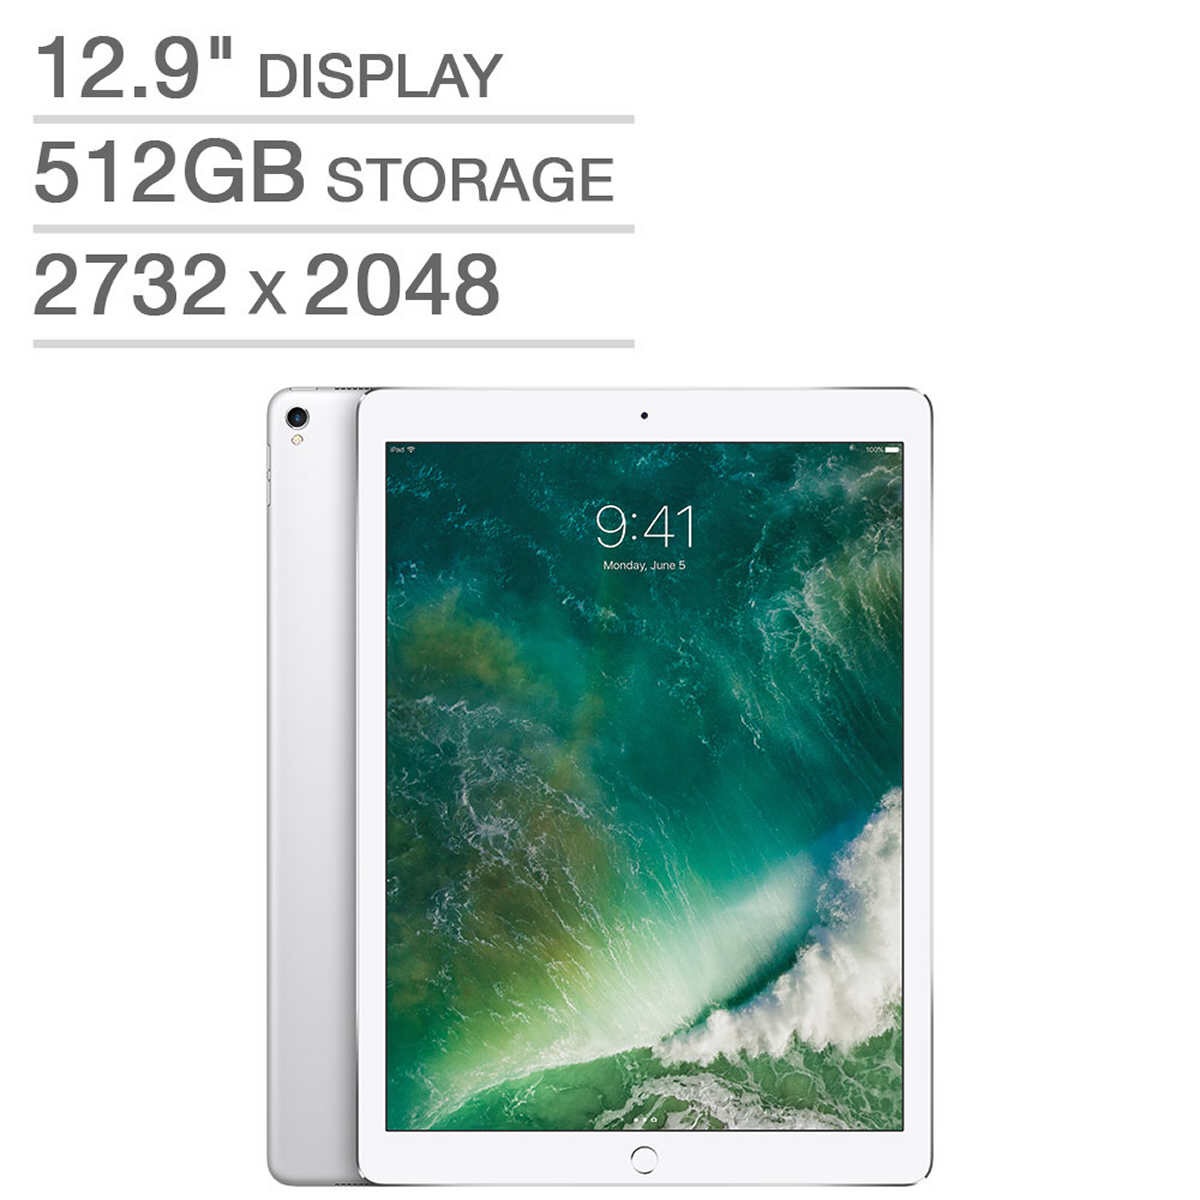 Apple iPad Pro A10X Chip - 512GB - Silver
12.9寸，三色可选